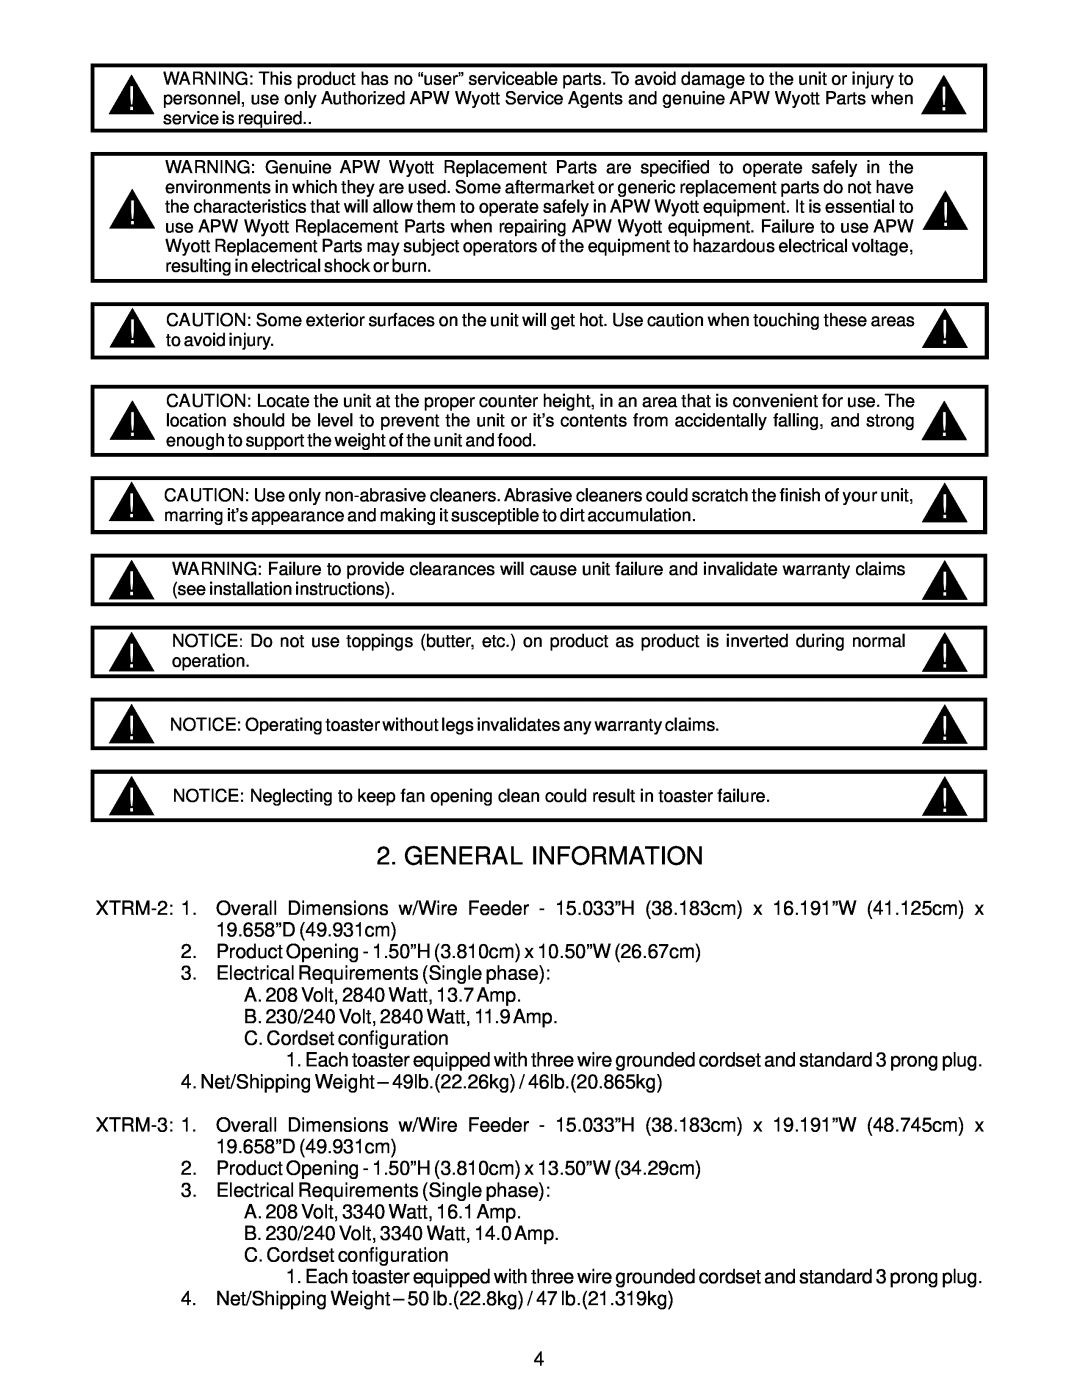 APW Wyott XTRM-2, XTRM-3 operating instructions General Information 